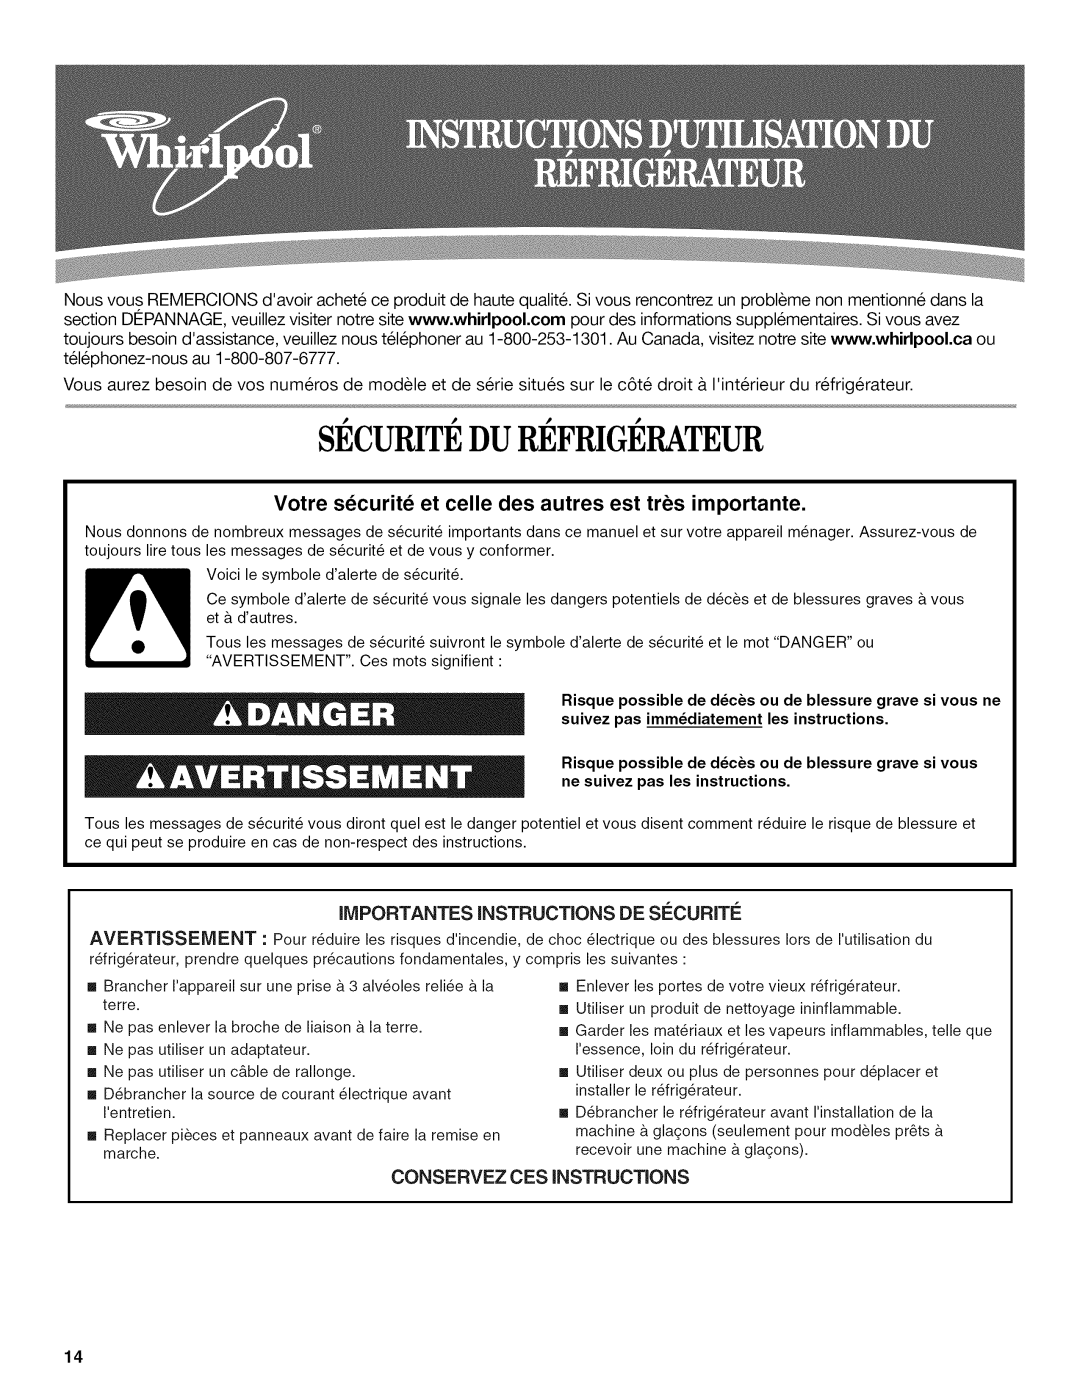 Whirlpool W10131412A Securitedu Refrigerateur, IlViPORTANTES INSTRUCTIONS DE SECURITi, Conservezcesinstructions 